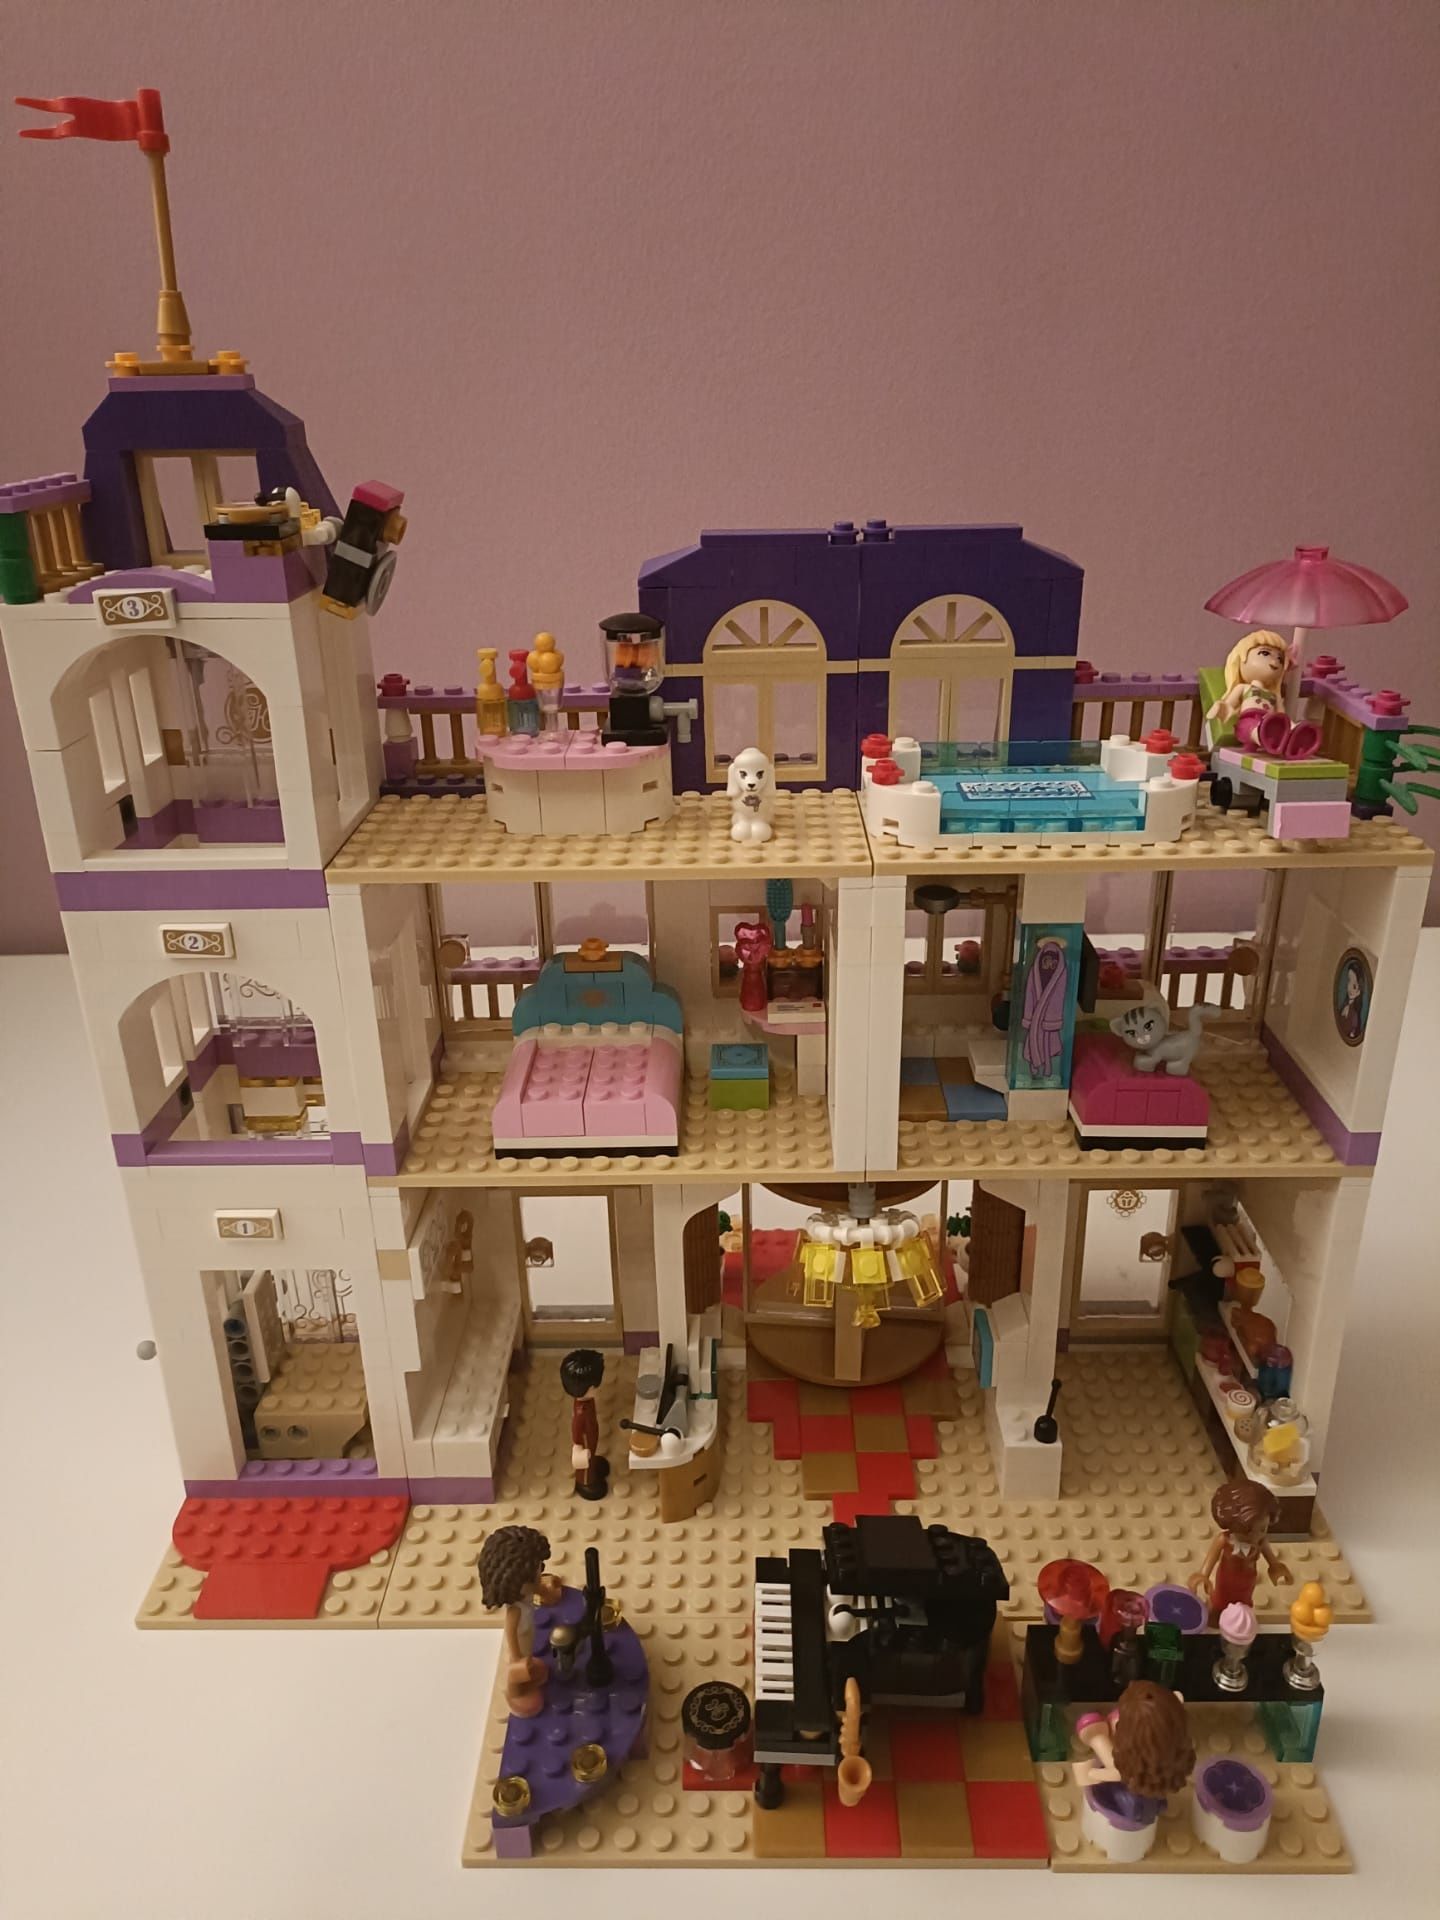 O Grande Hotel de Heartlake-Lego Friends-Ref. 41101